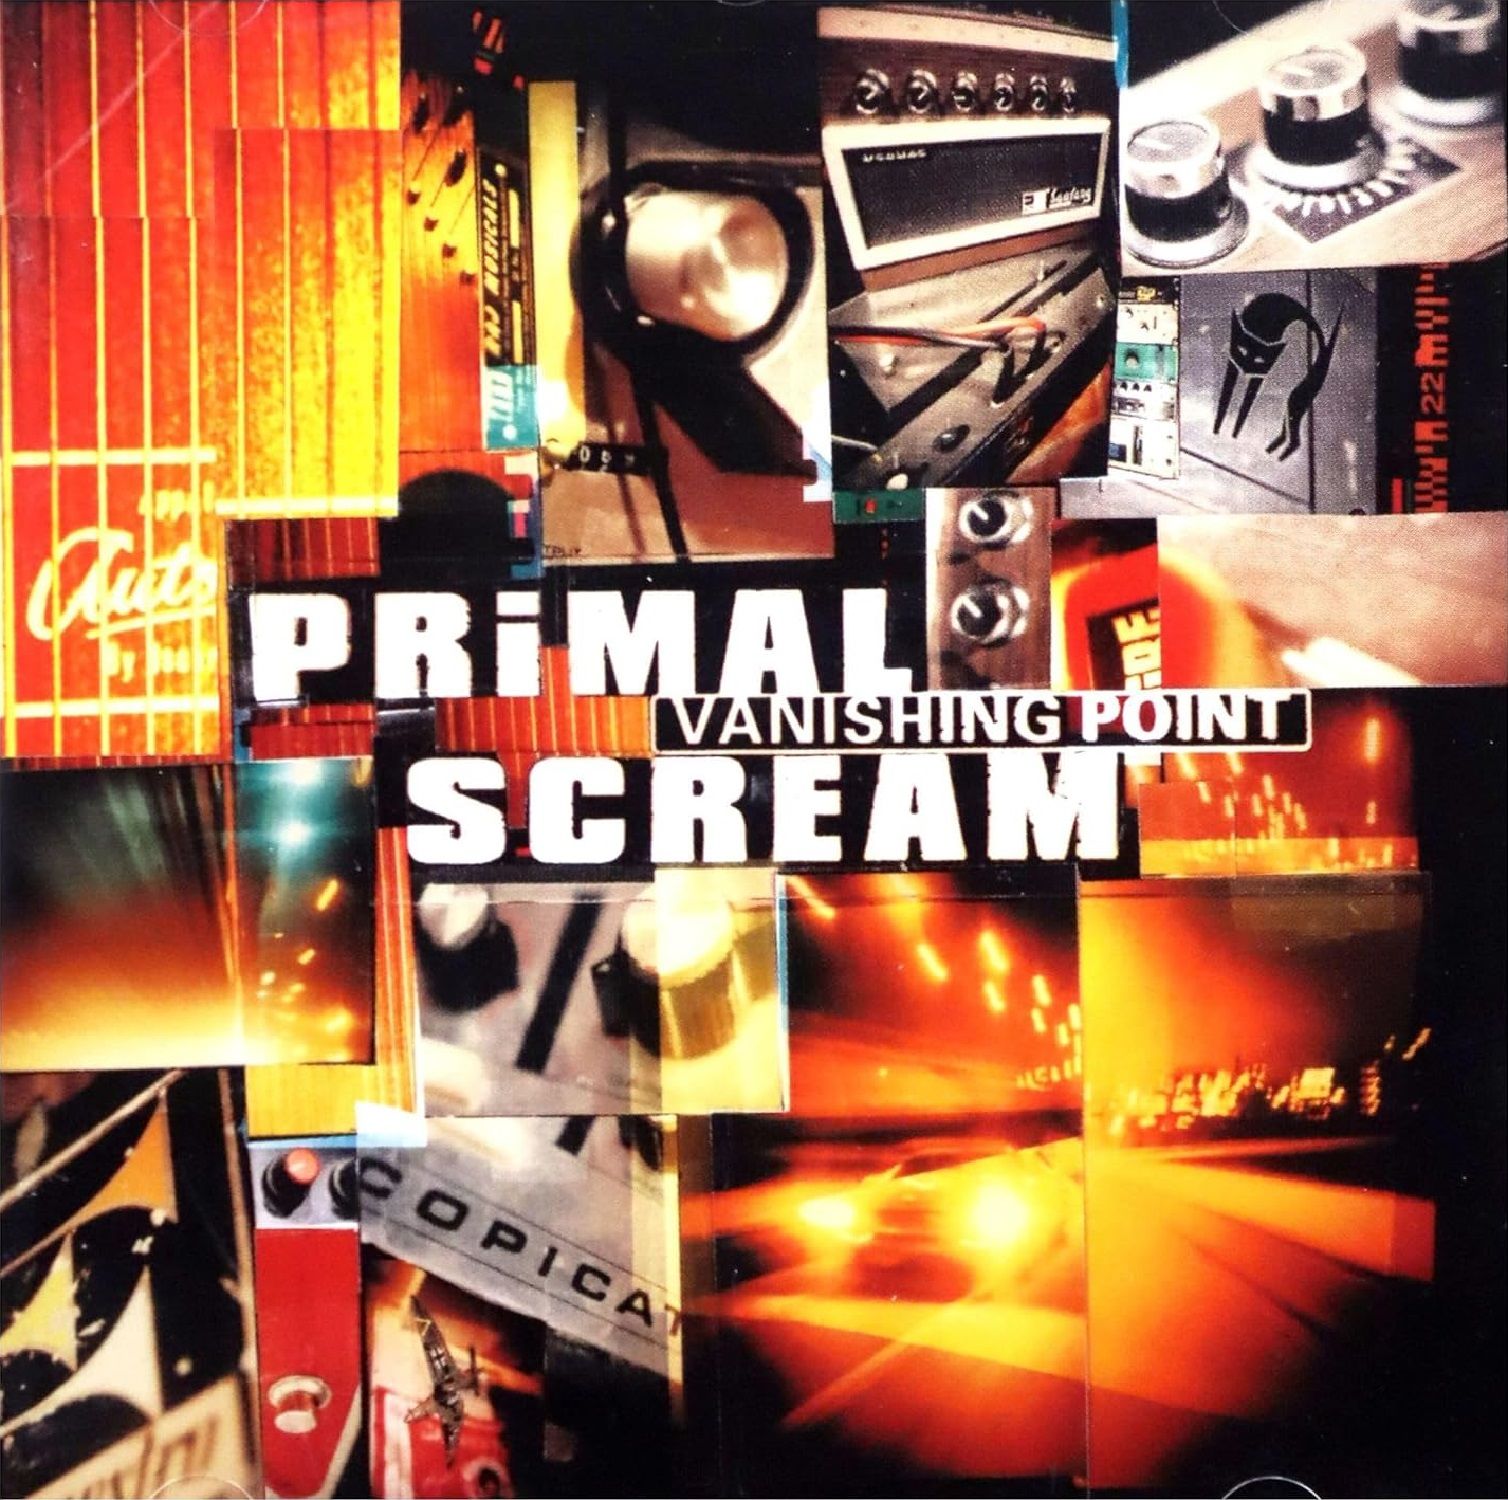 PRIMAL SCREAM - VANISHING POINT (CD) (1997)